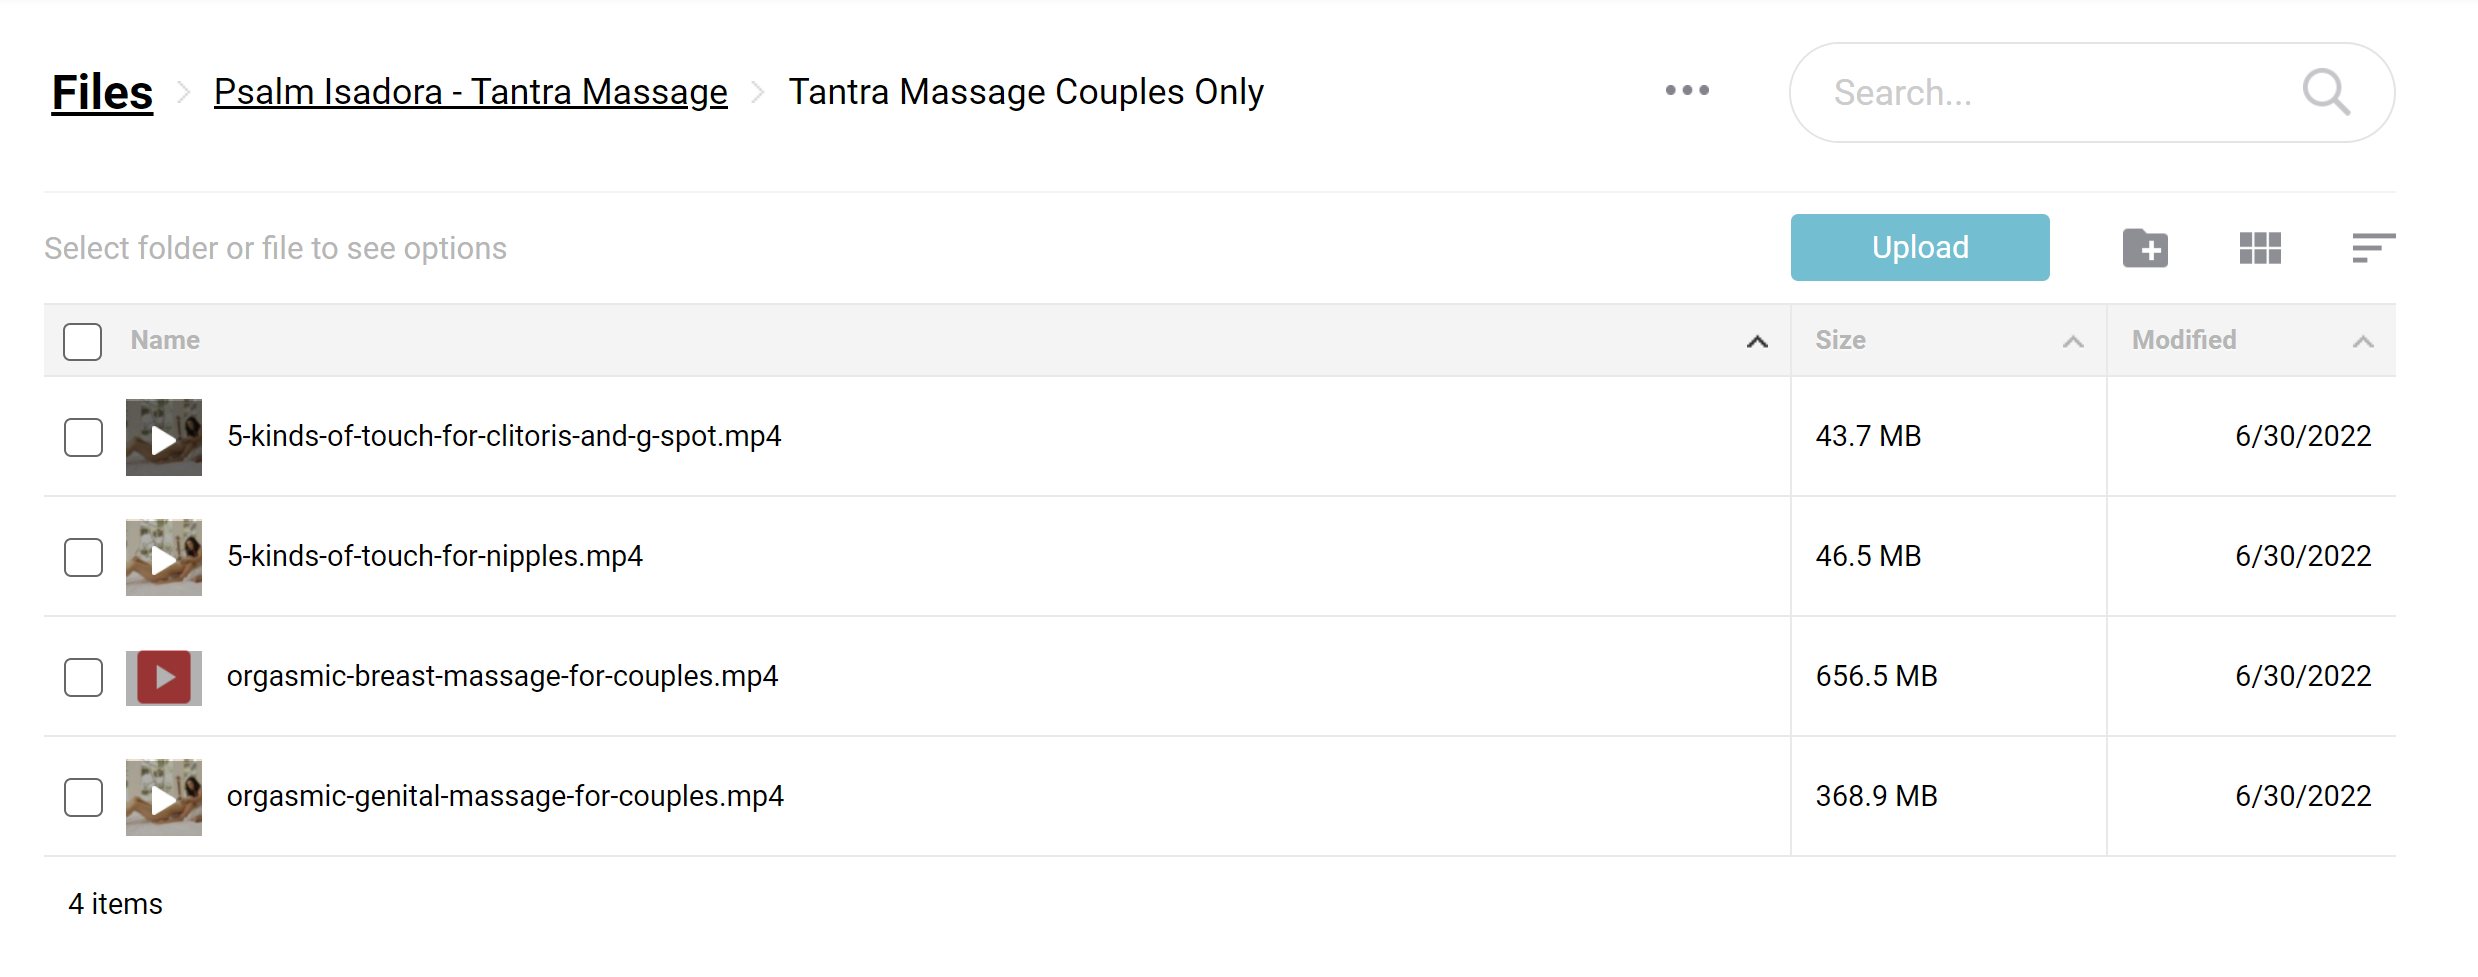 Tantra Massage Couple